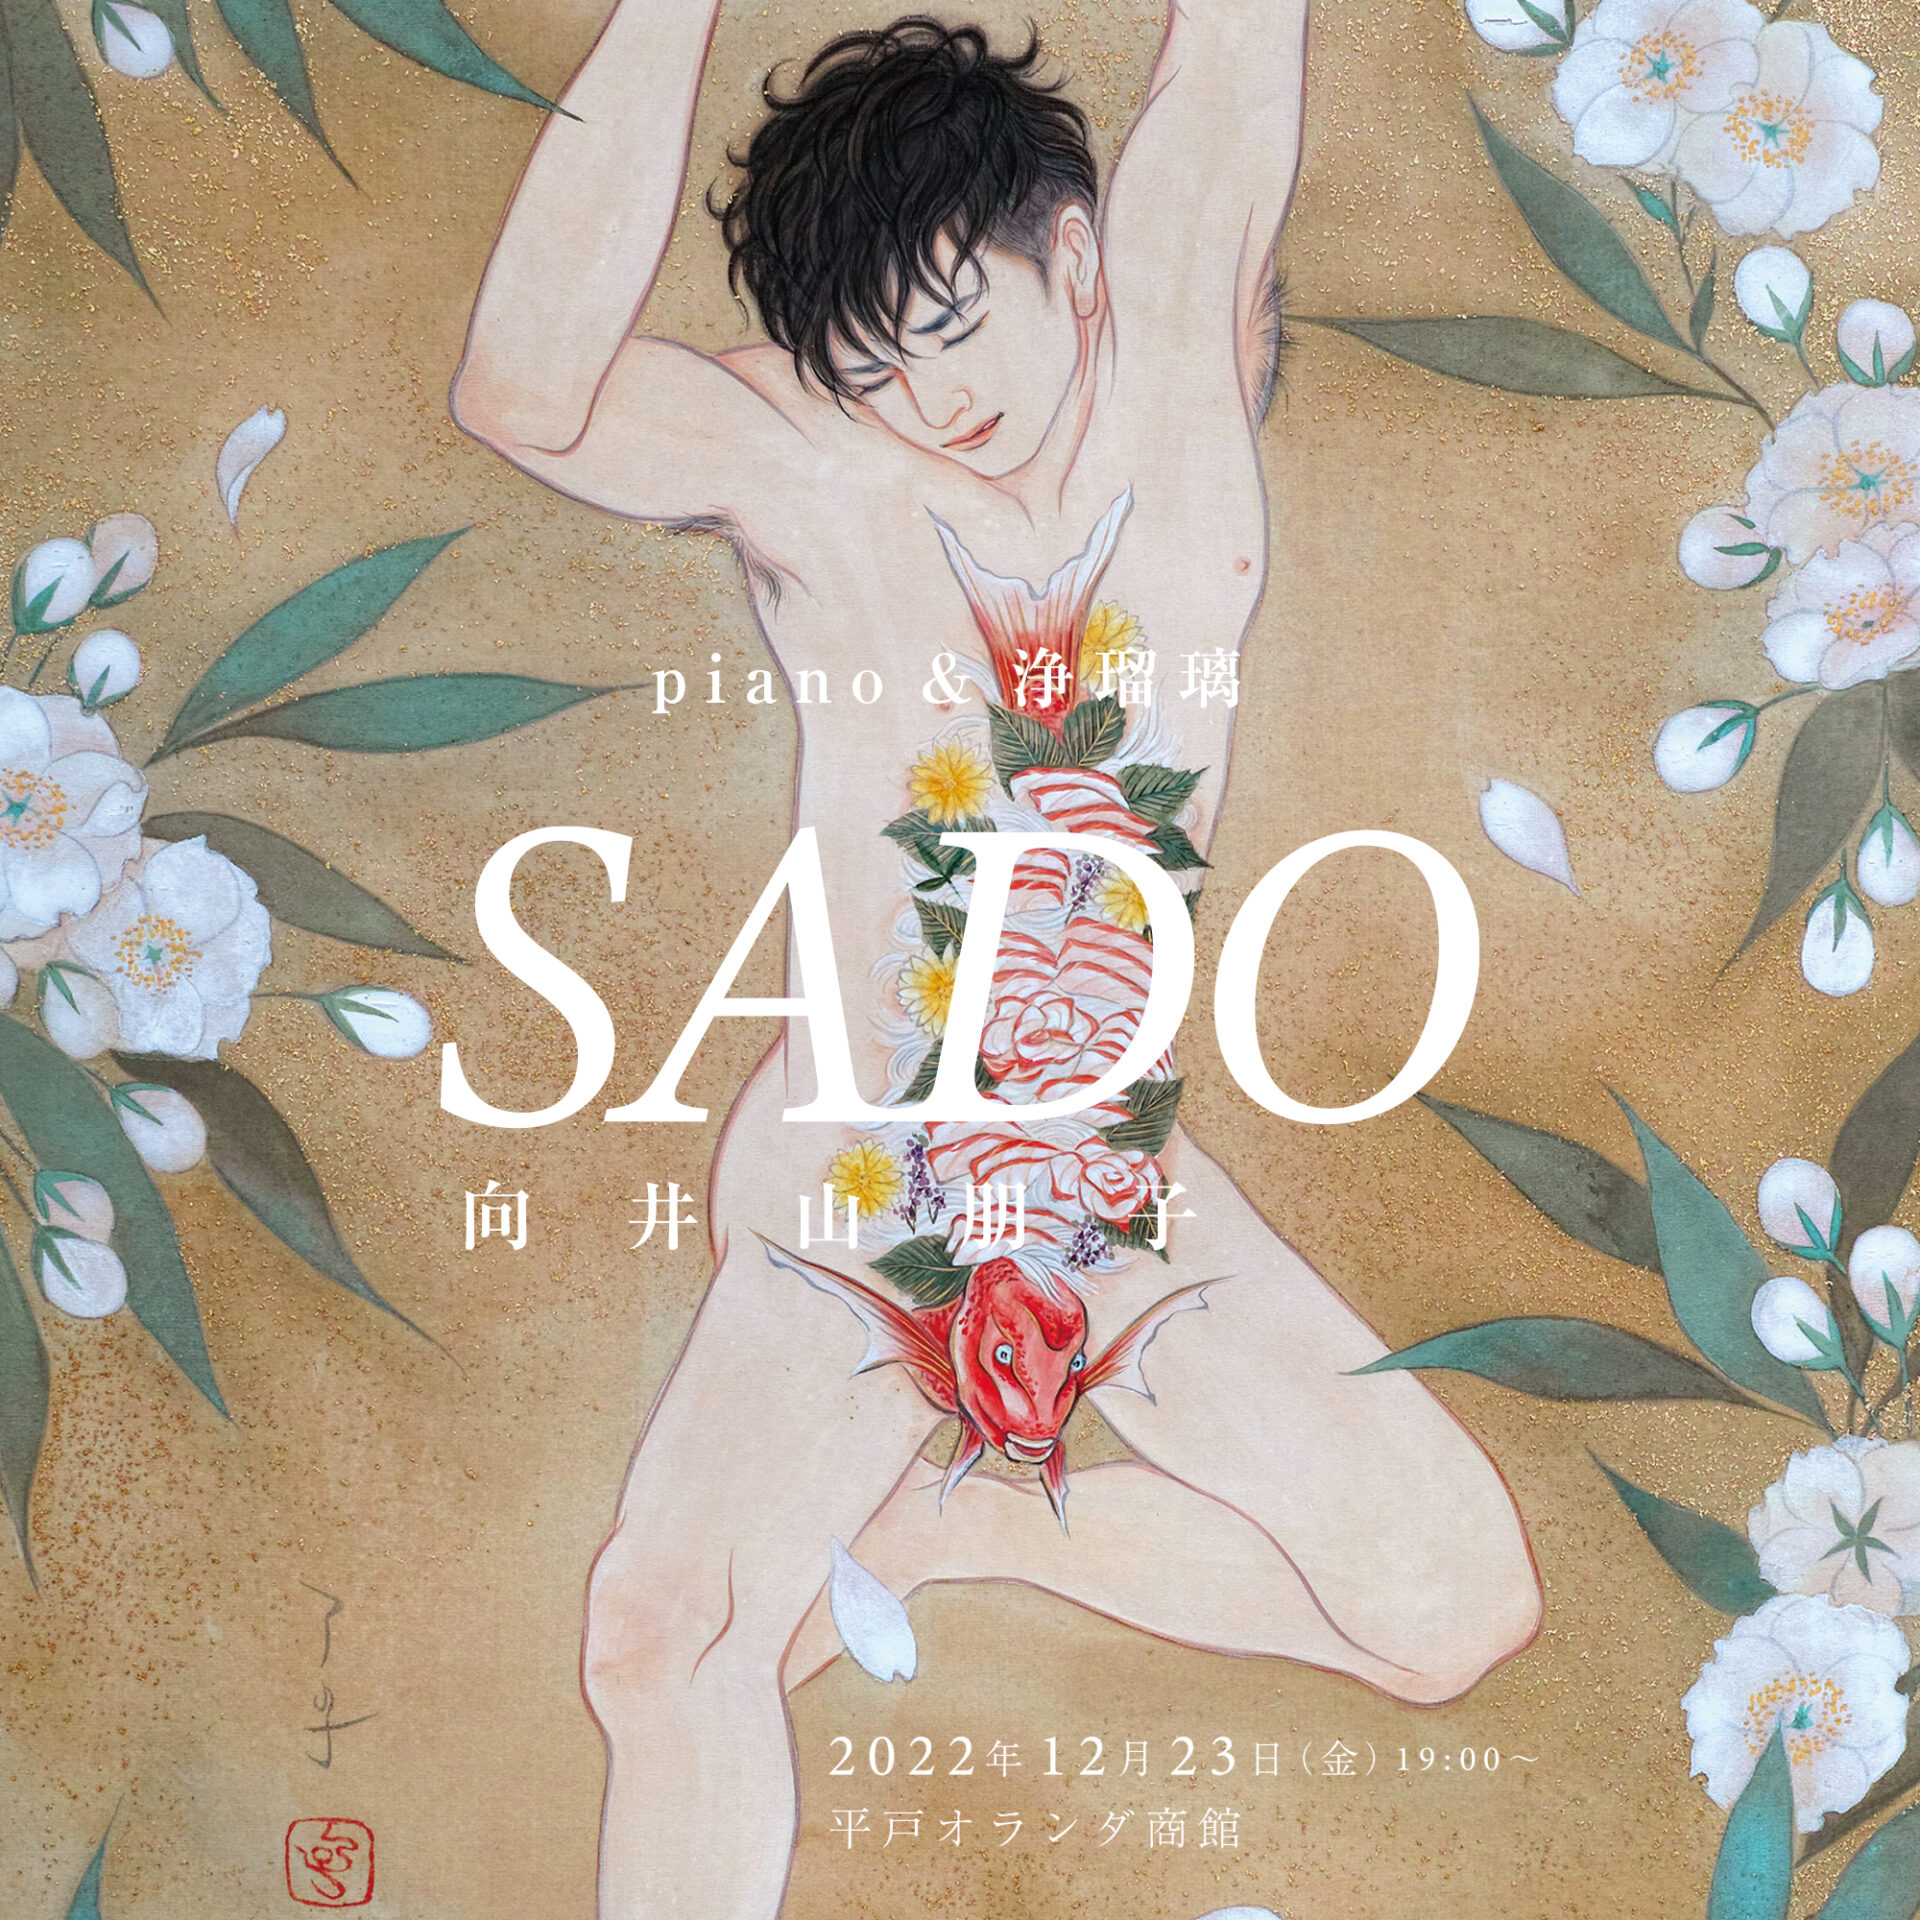 SADO | 向井山朋子 | piano & 浄瑠璃 (12/23)